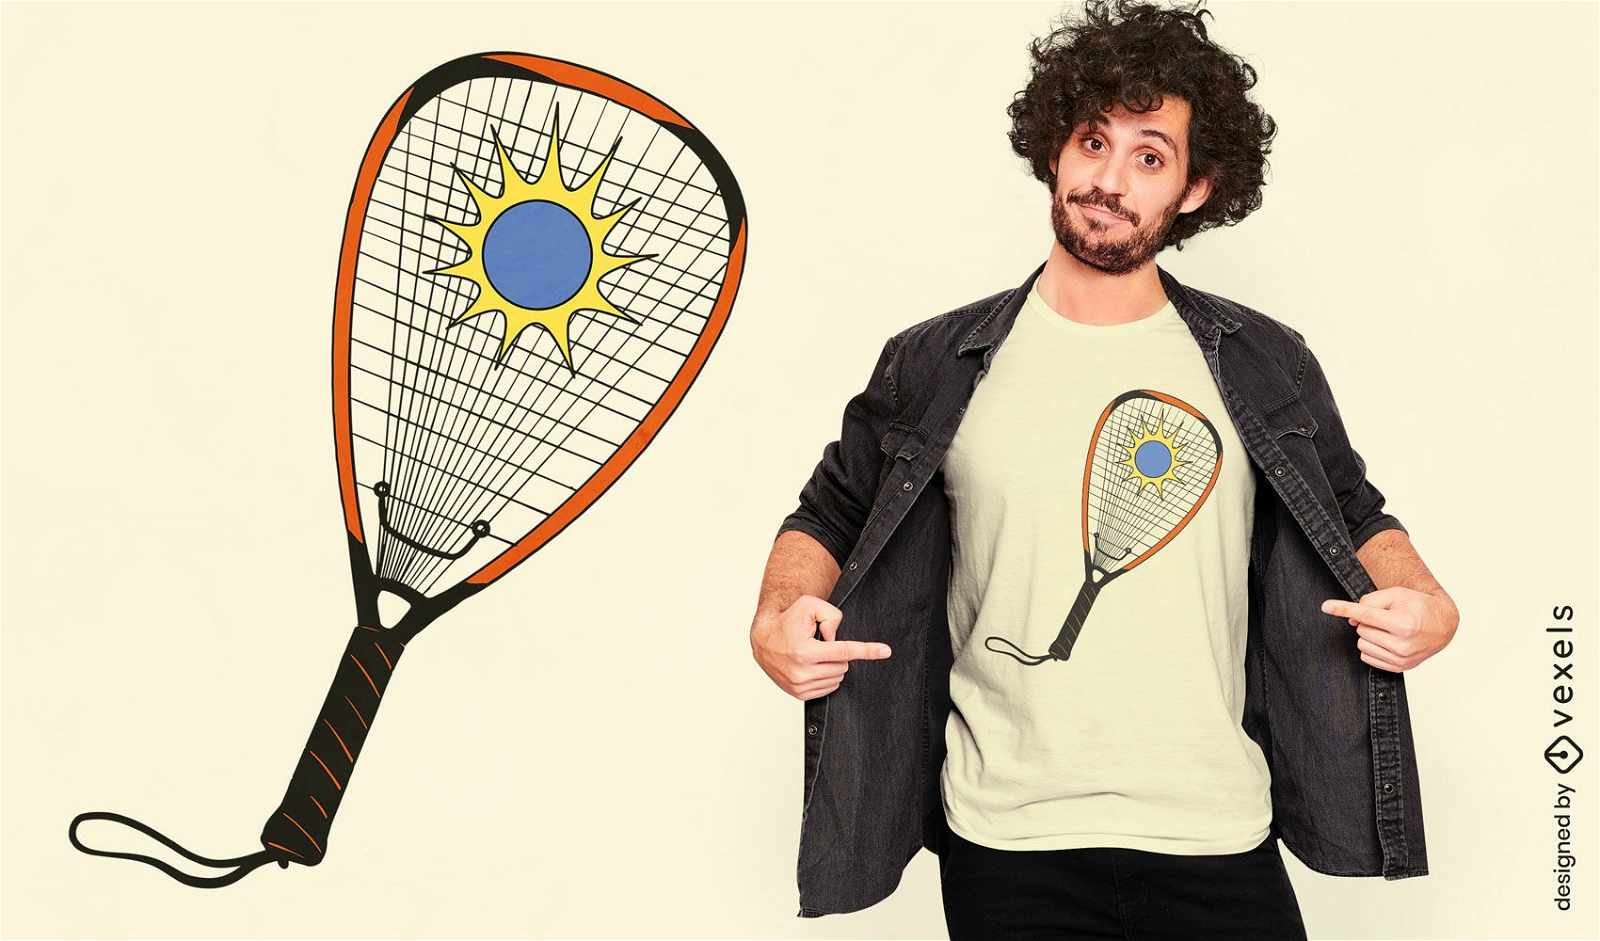 Dise?o de camiseta Hit of squash racket.